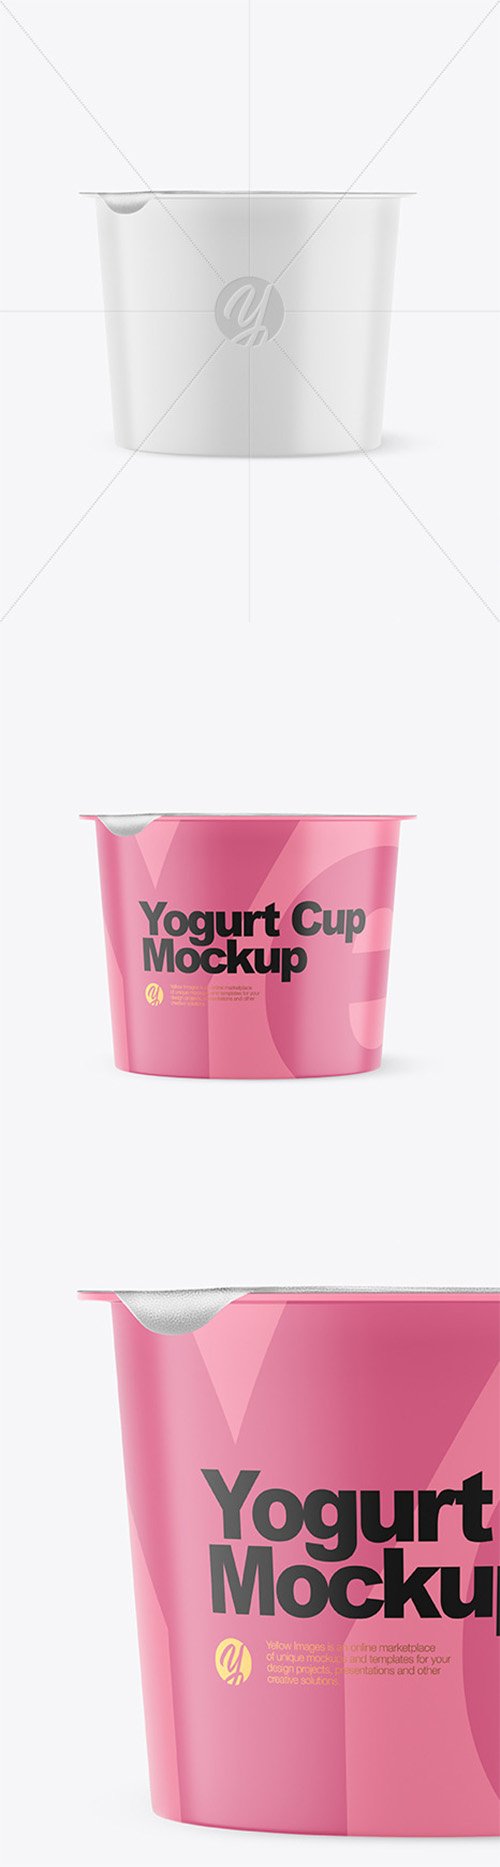 Matte Plastic Yogurt Cup With Foil Lid Mockup - Front View 66340